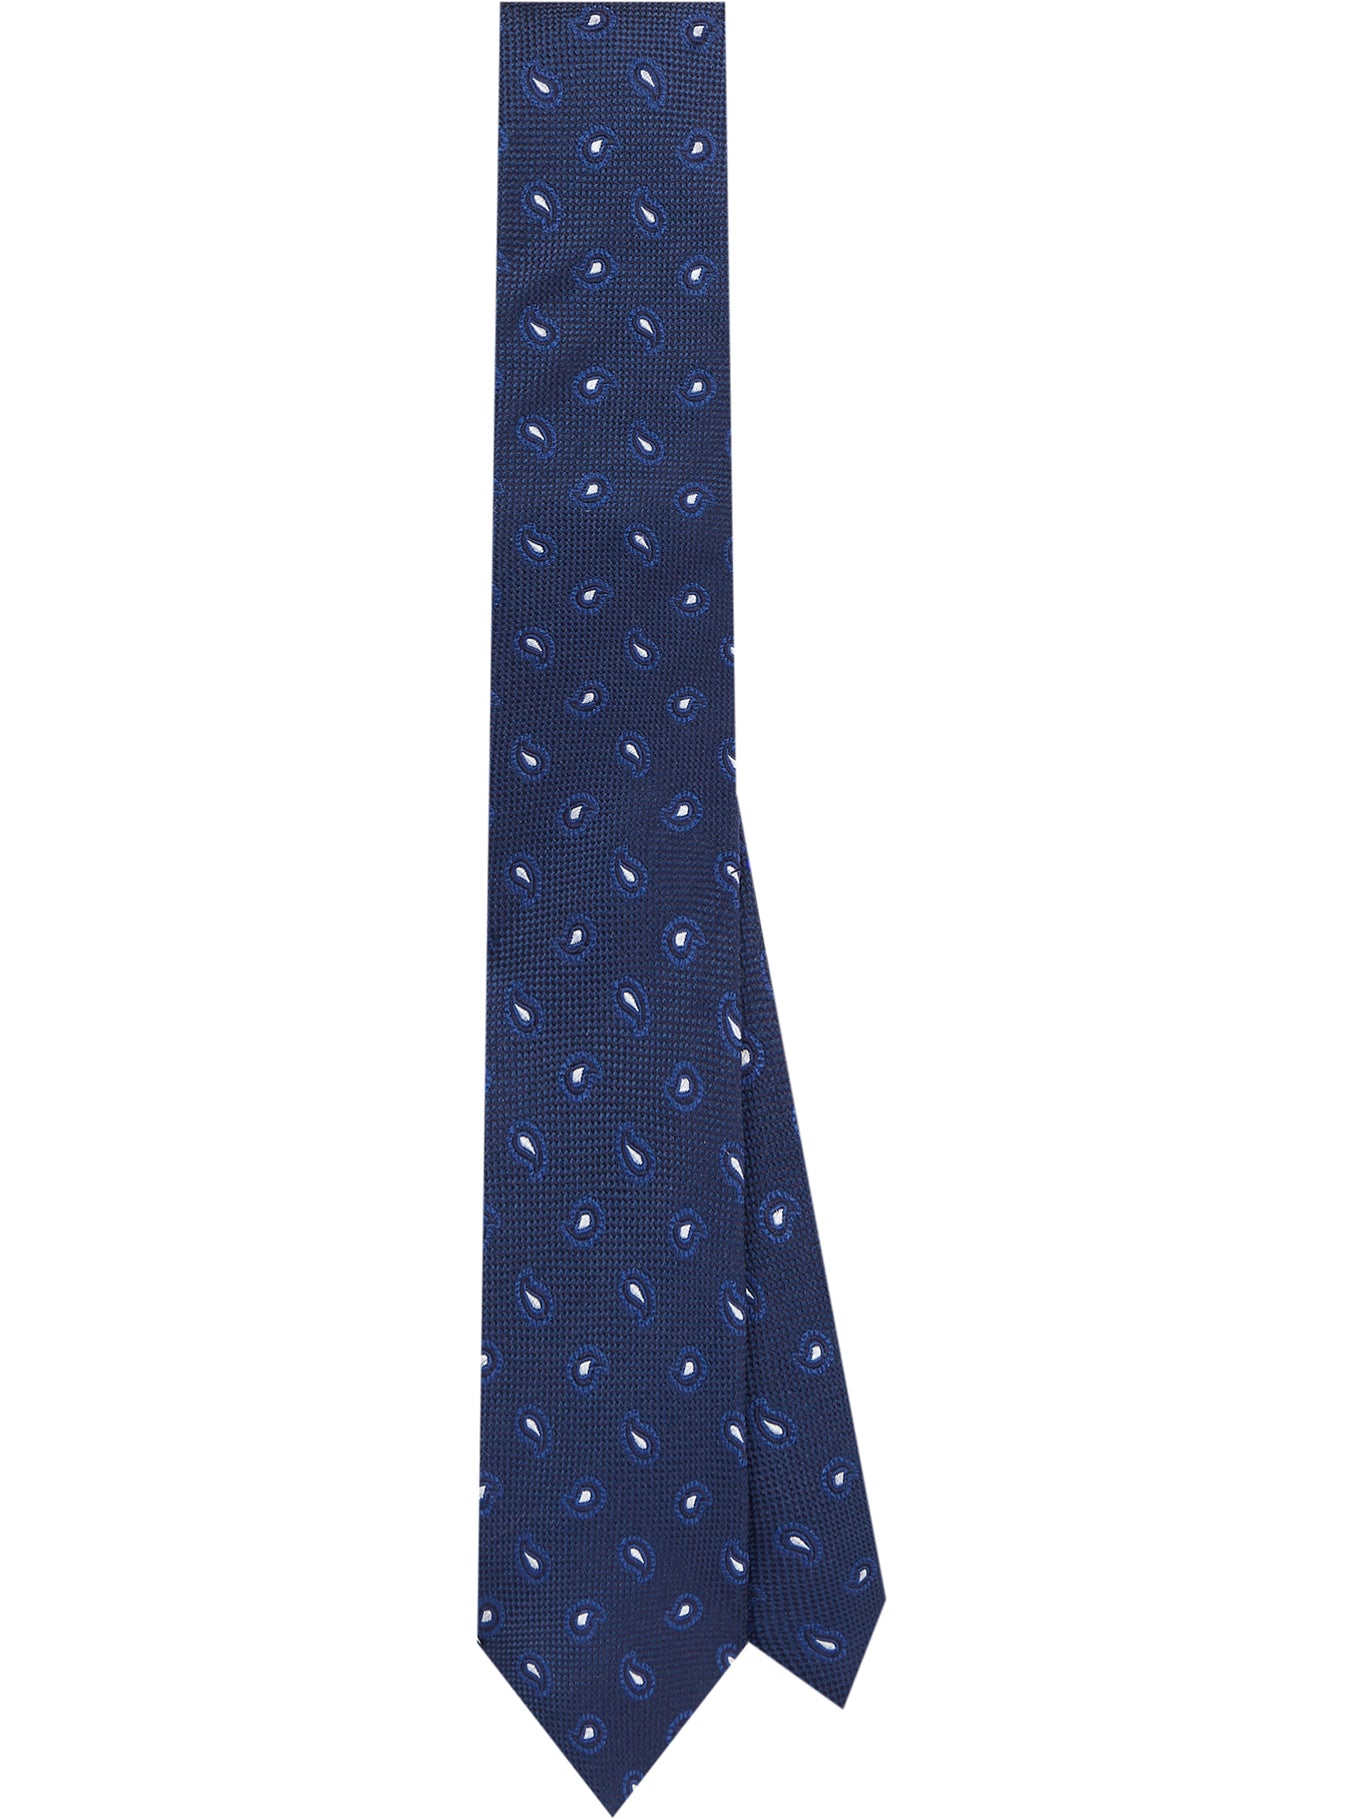 corbata-tommy-hilfiger-p-caballeros